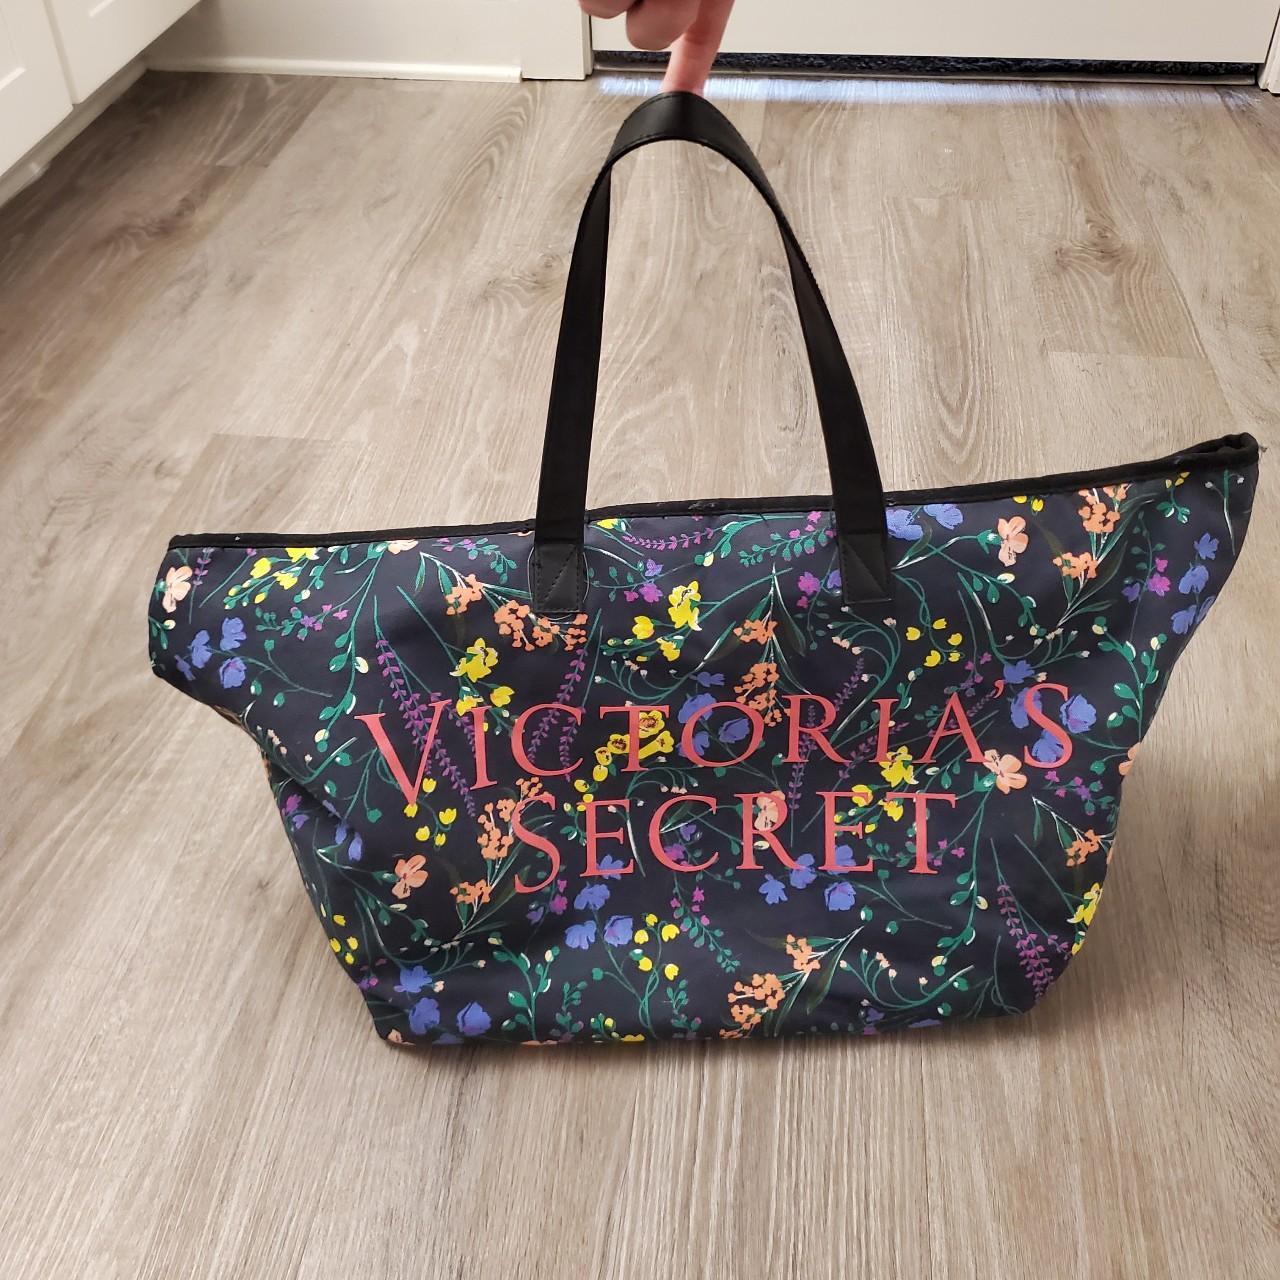 Victoria's Secret Women's Bag - Multi